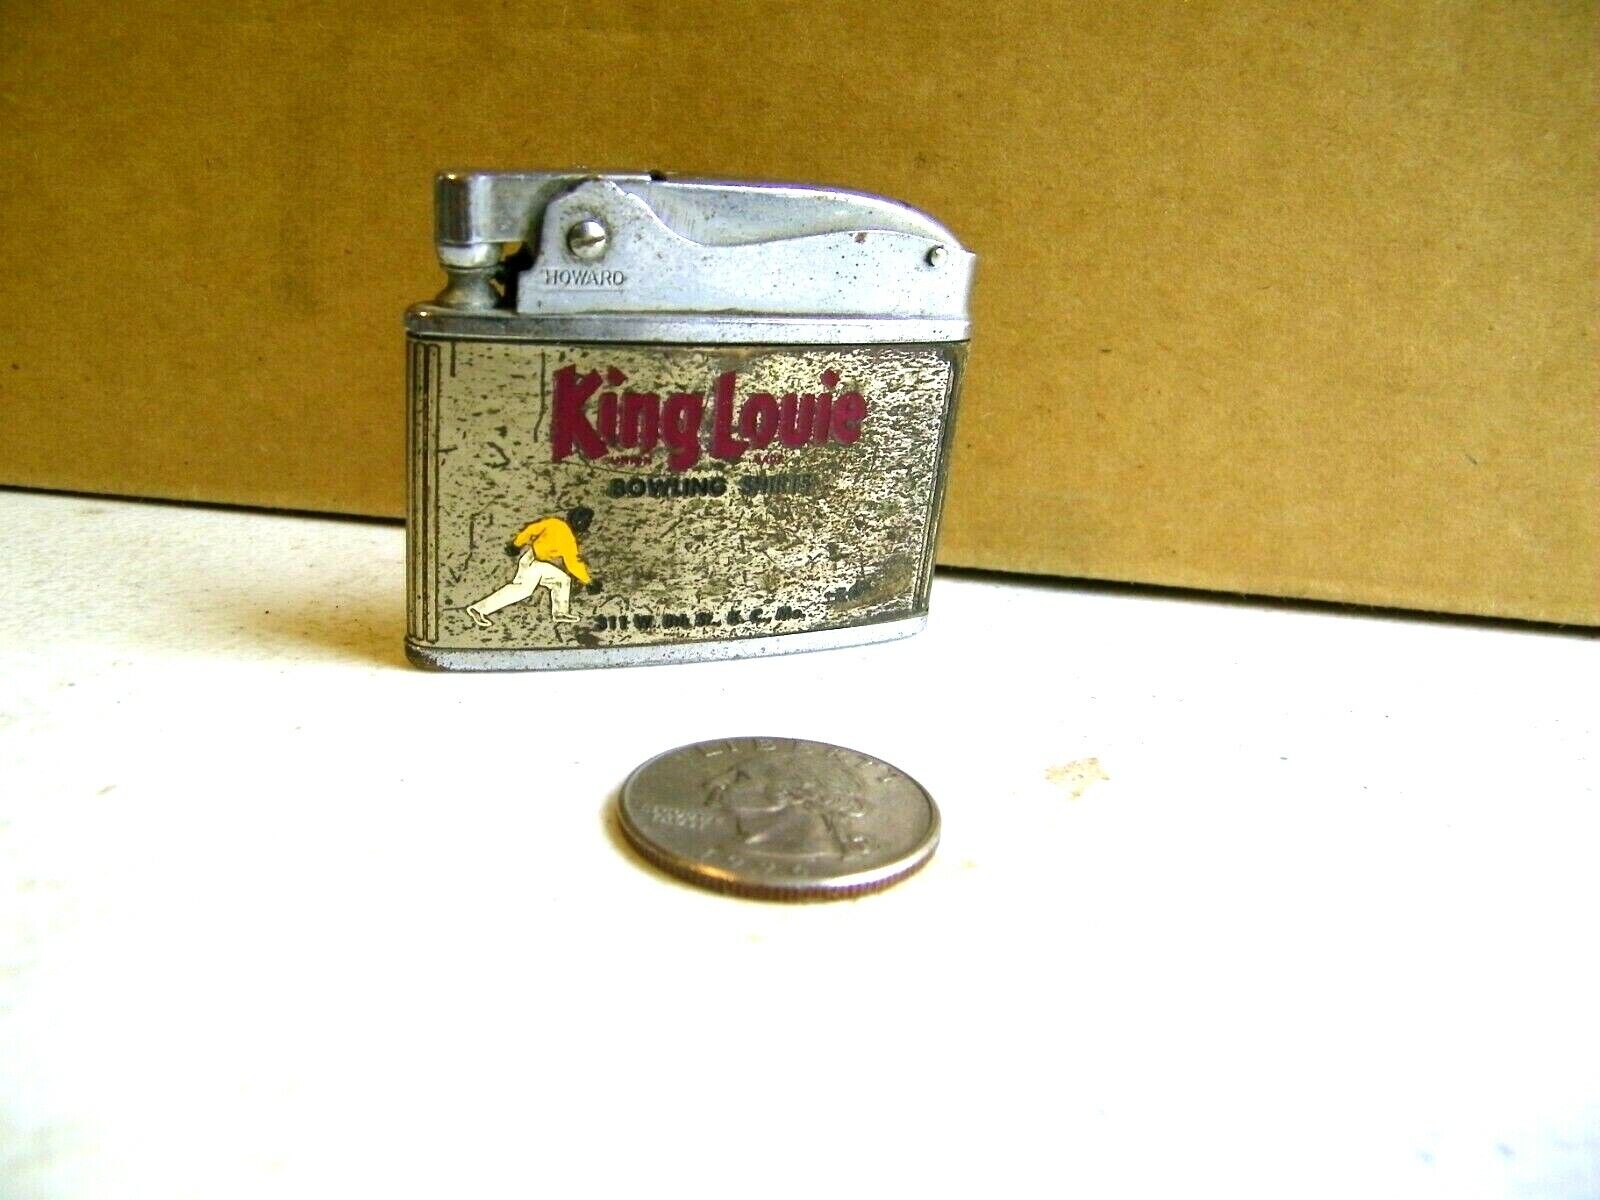 1950's KING LOUIE BOWLING SHIRTS advertising cigarette lighter KANSAS CITY MO.